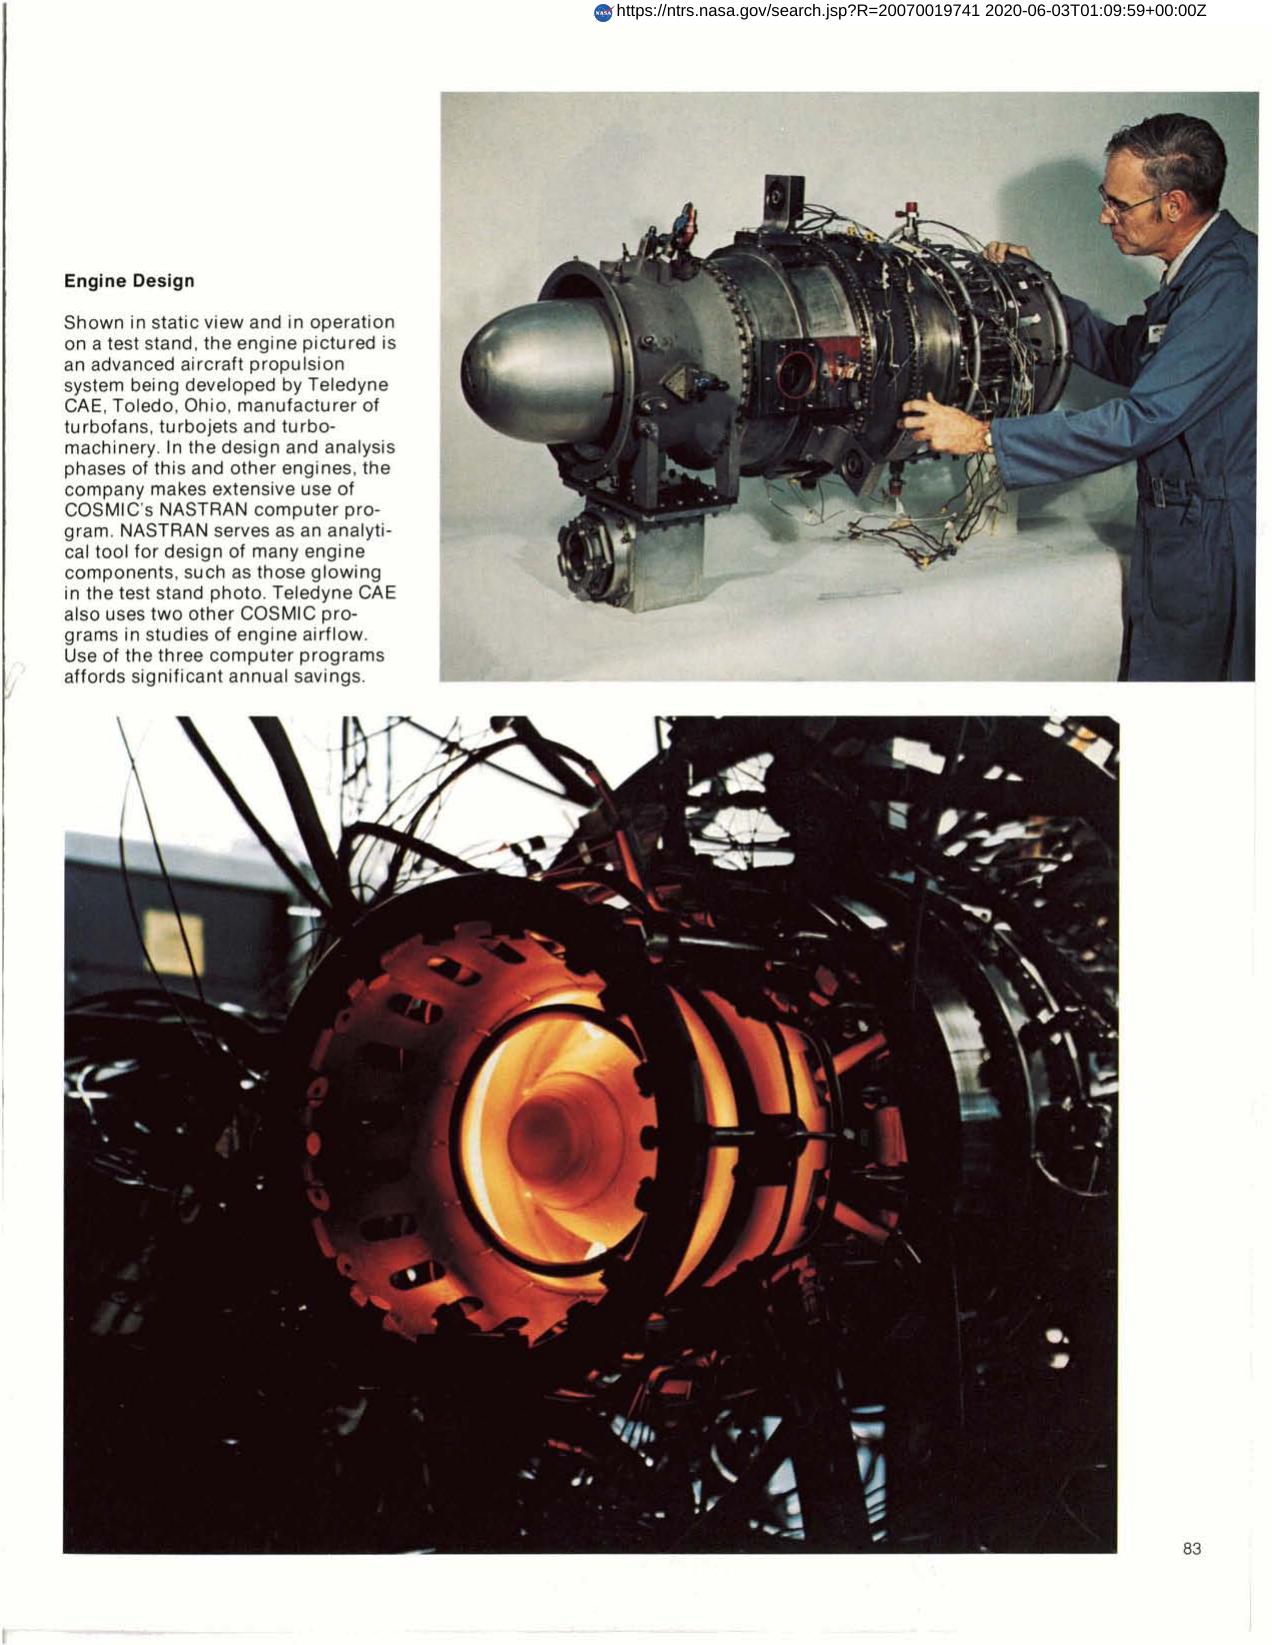 Engine Design